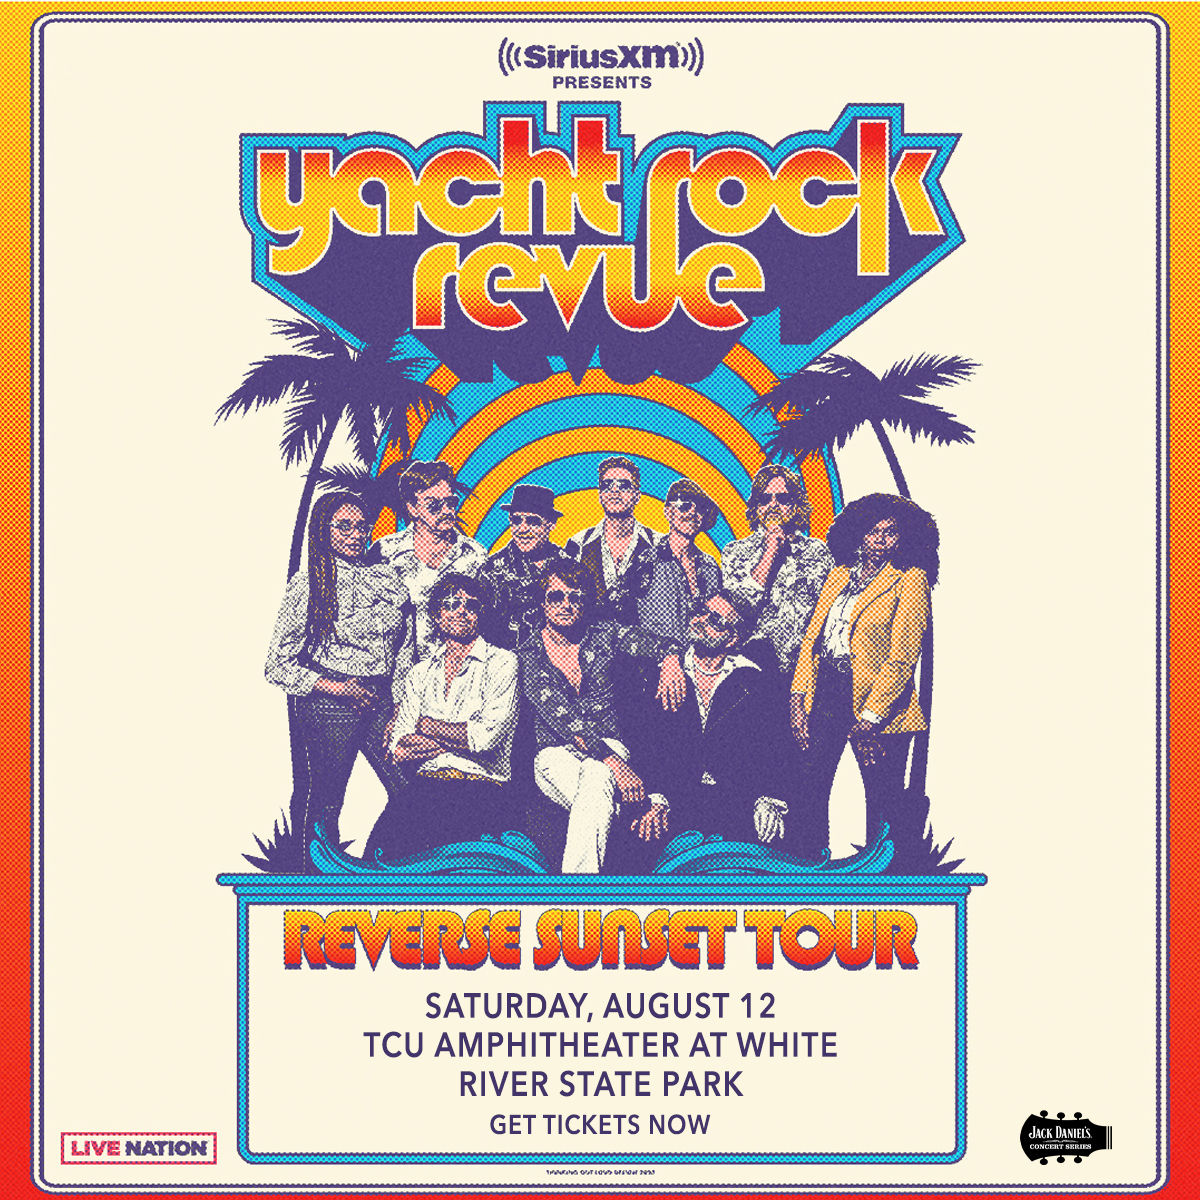 SiriusXM Presents Yacht Rock Revue Reverse Sunset Tour Downtown